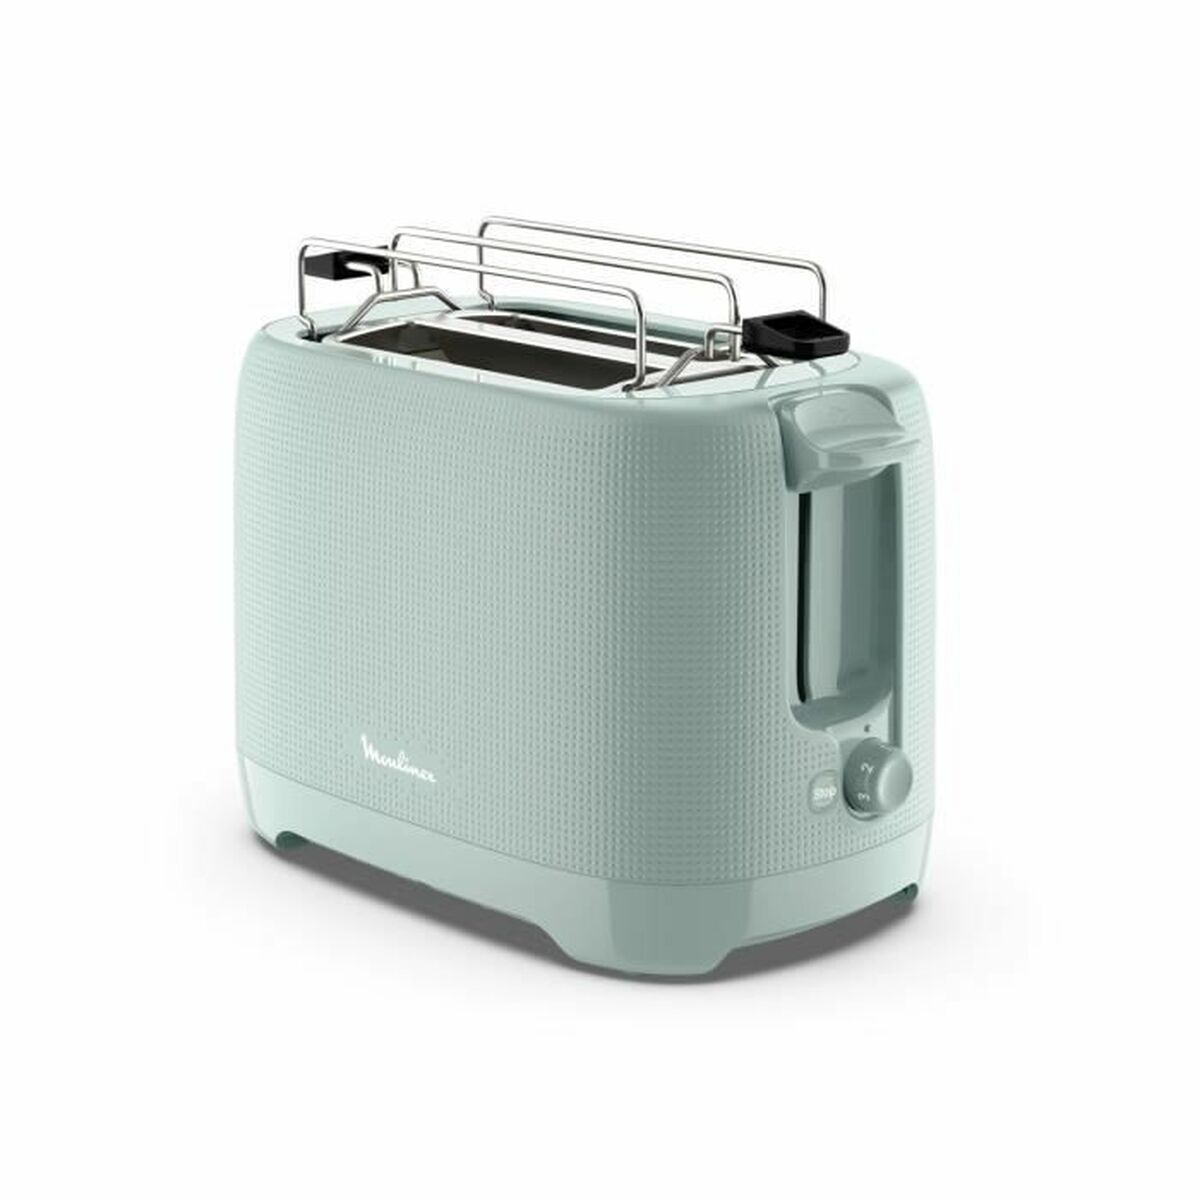 Toaster Moulinex 850 W - CA International 